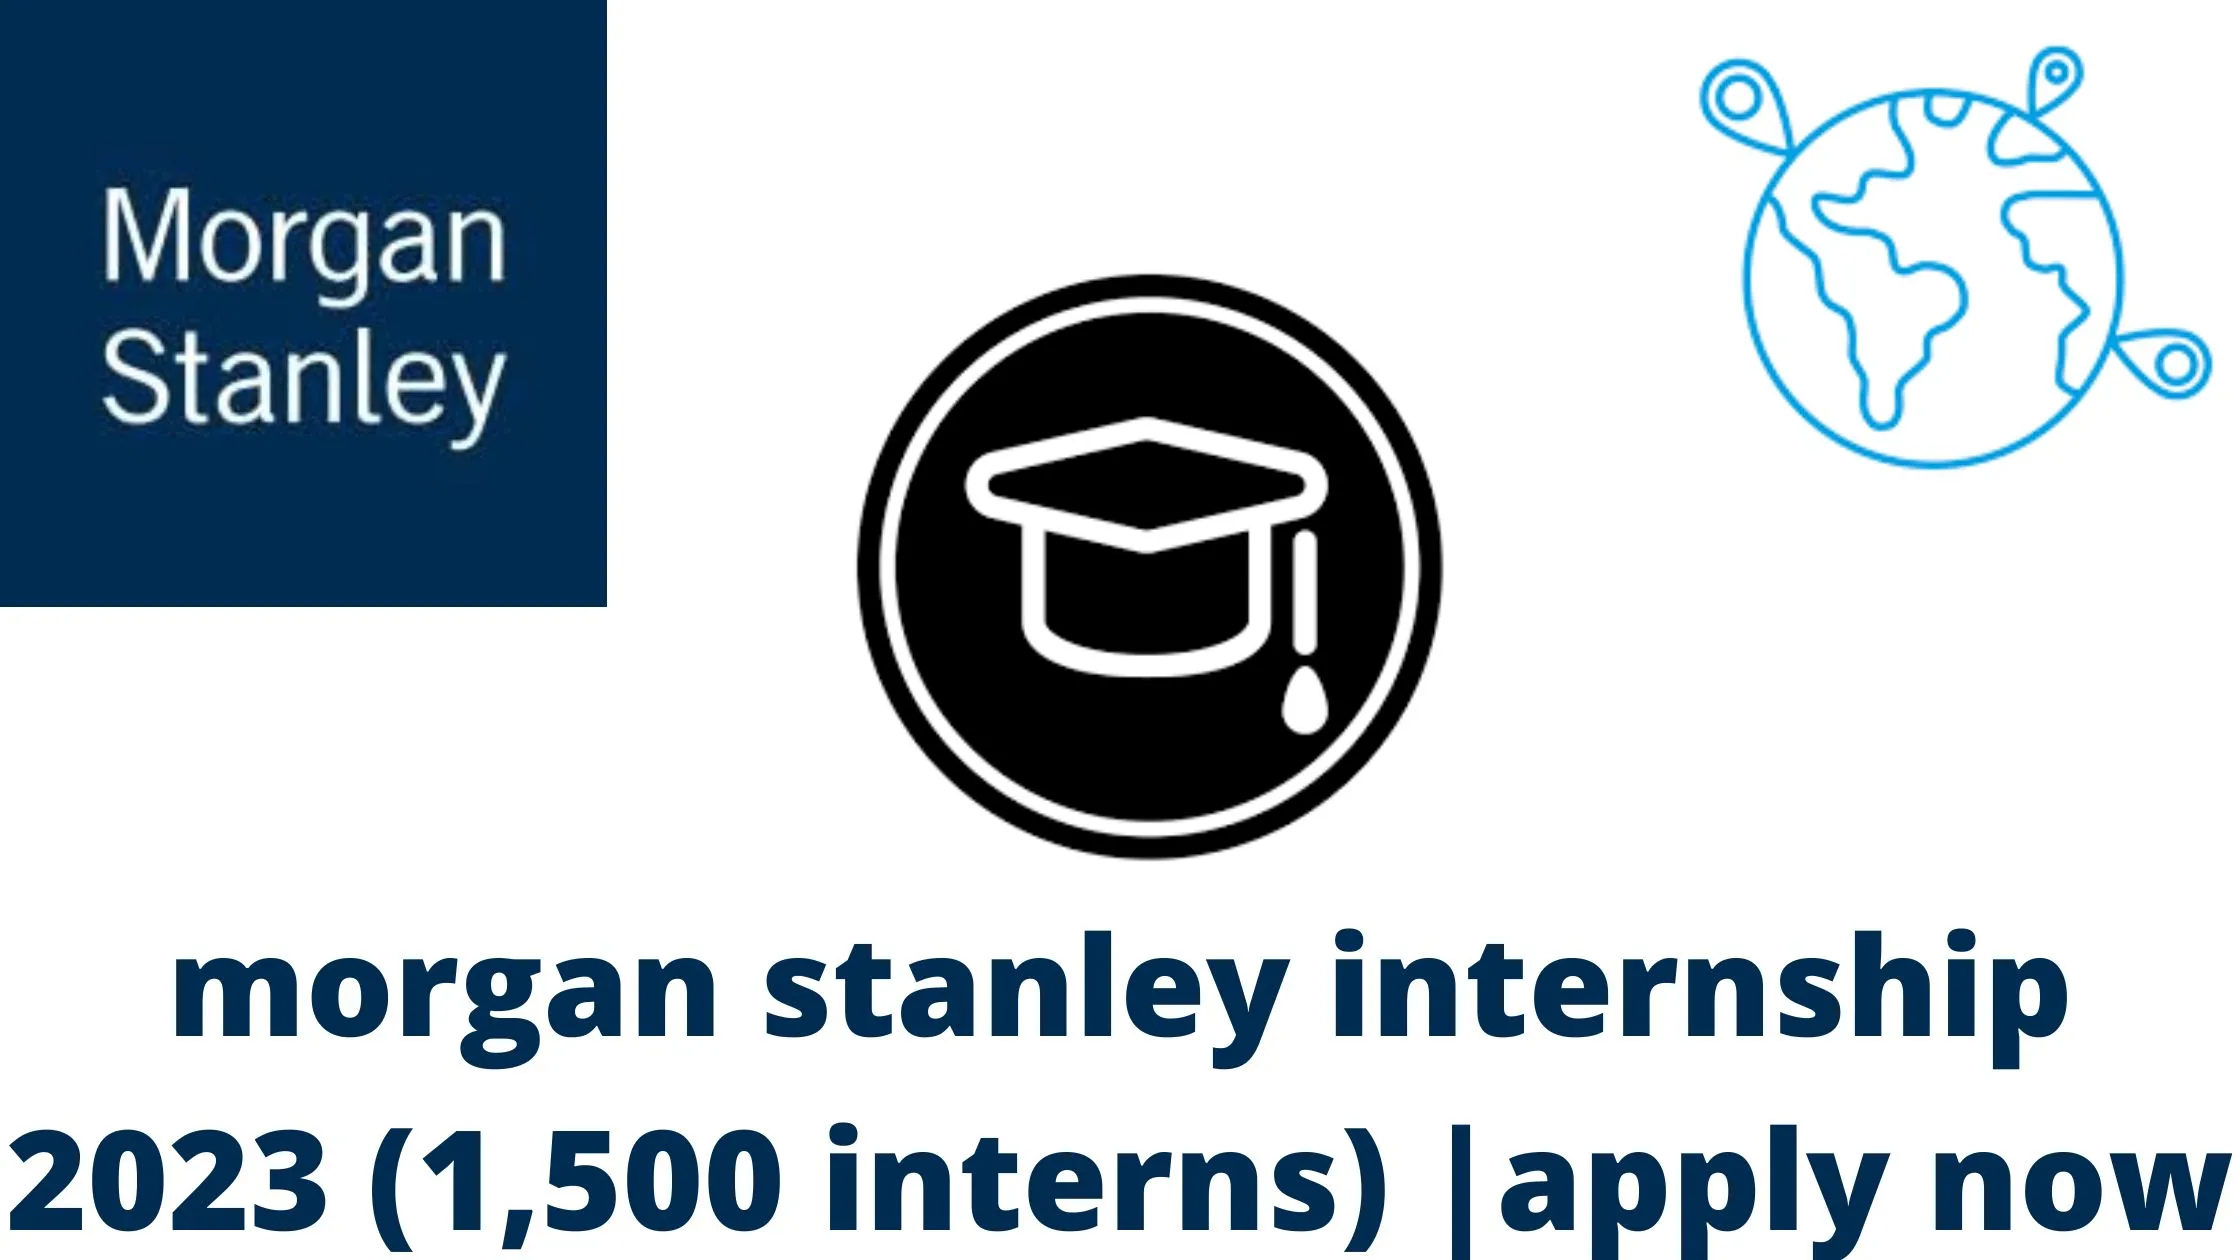 morgan stanley internship 2023 (1,500 interns) |apply now